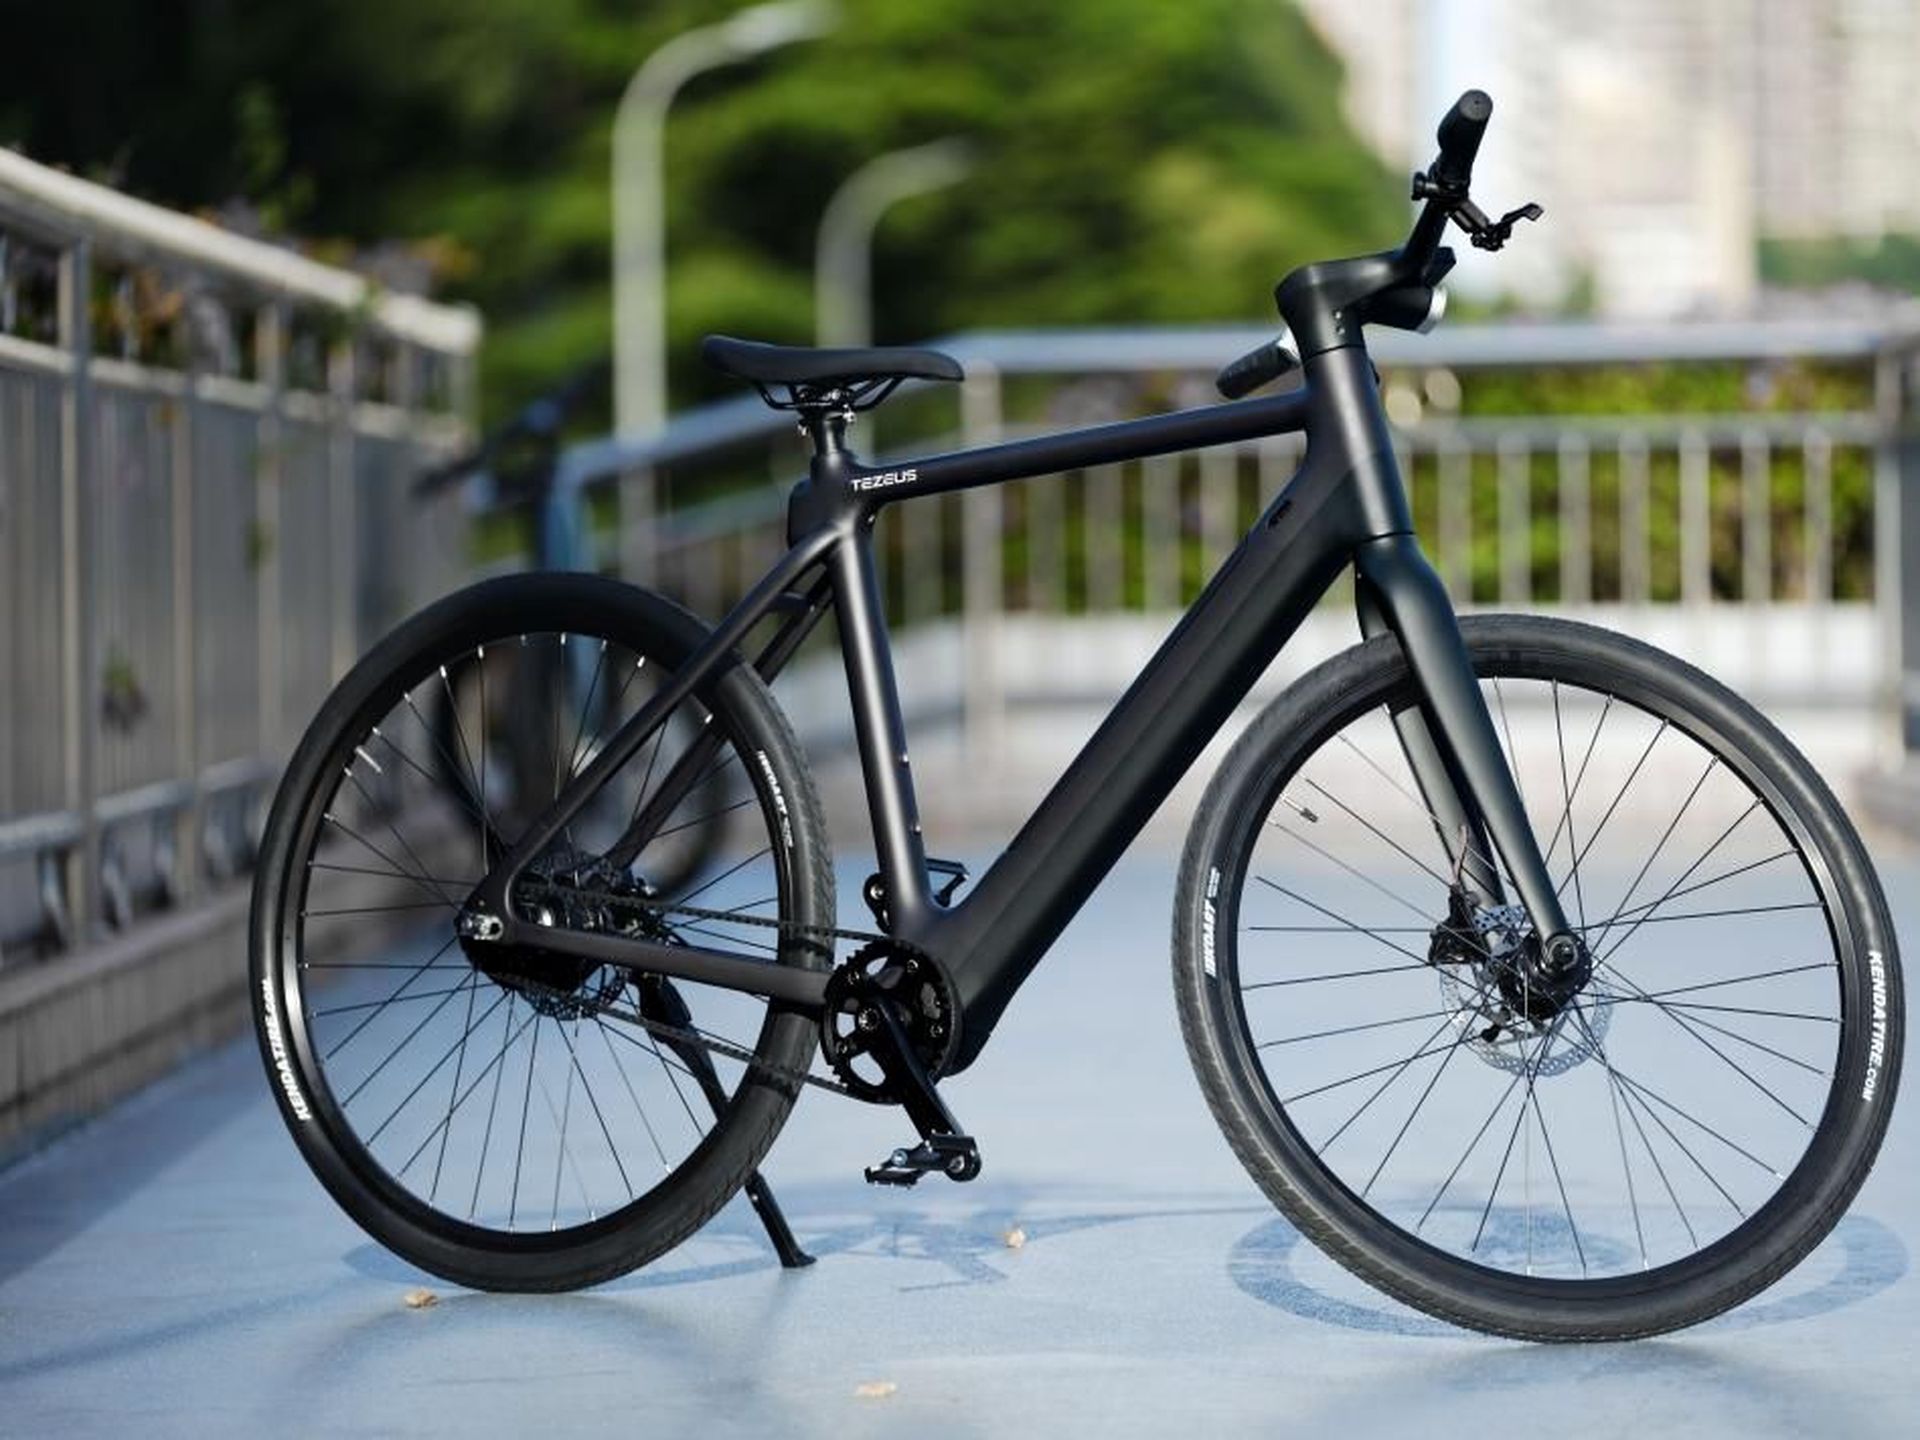 TEZEUS C8 E-Bike review: When true smart features shine on electric bike